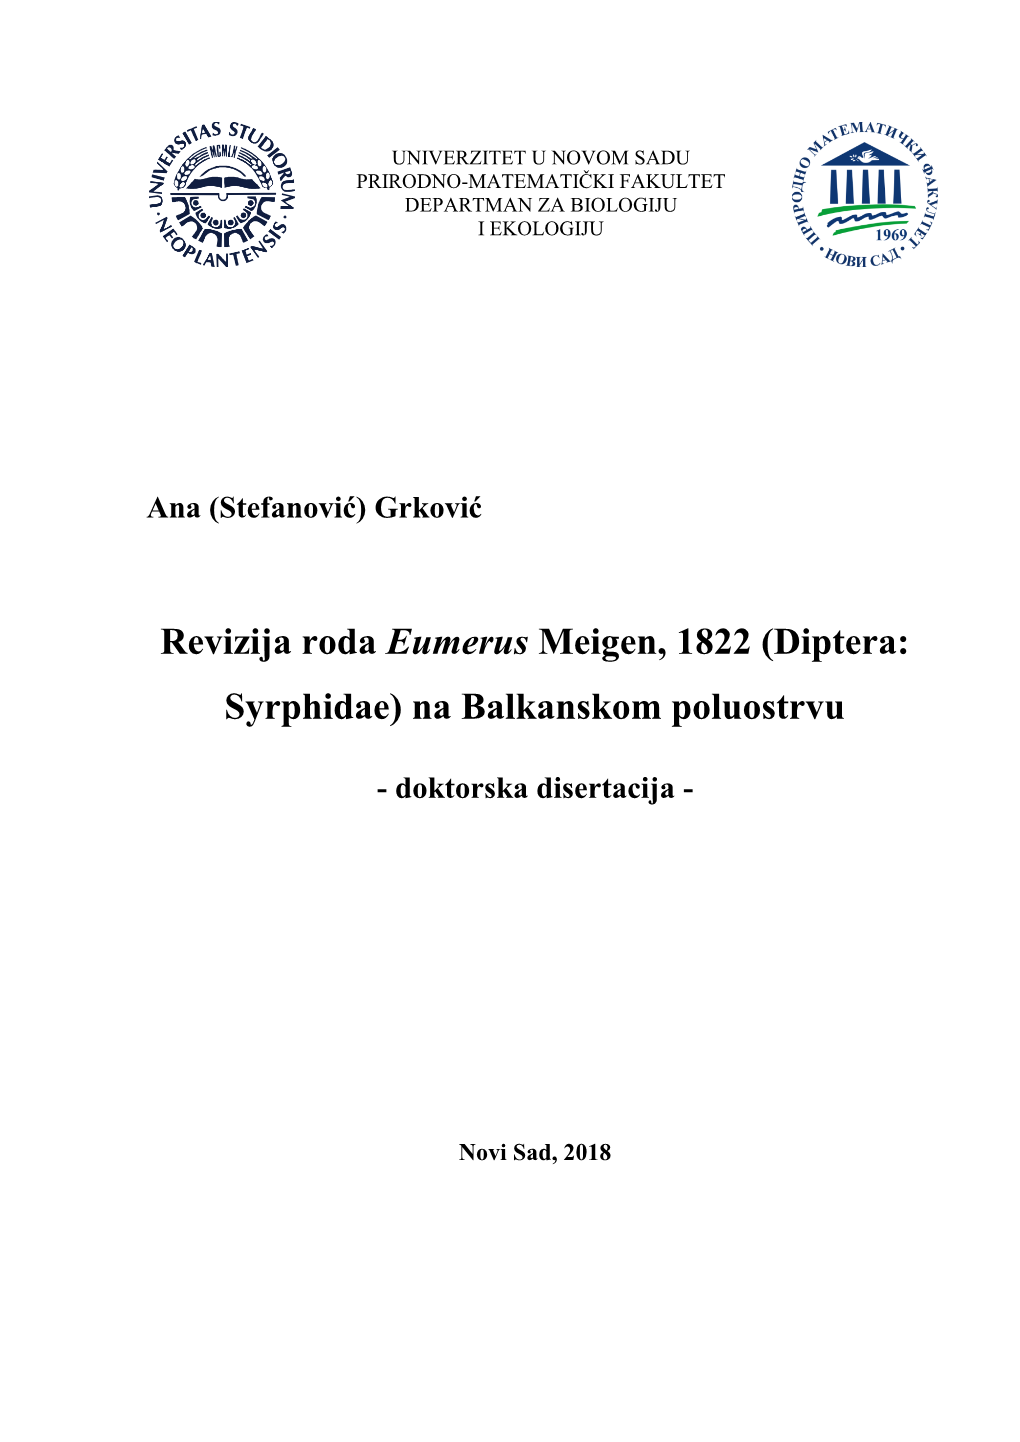 Revizija Roda Eumerus Meigen, 1822 (Diptera: Syrphidae) Na Balkanskom Poluostrvu